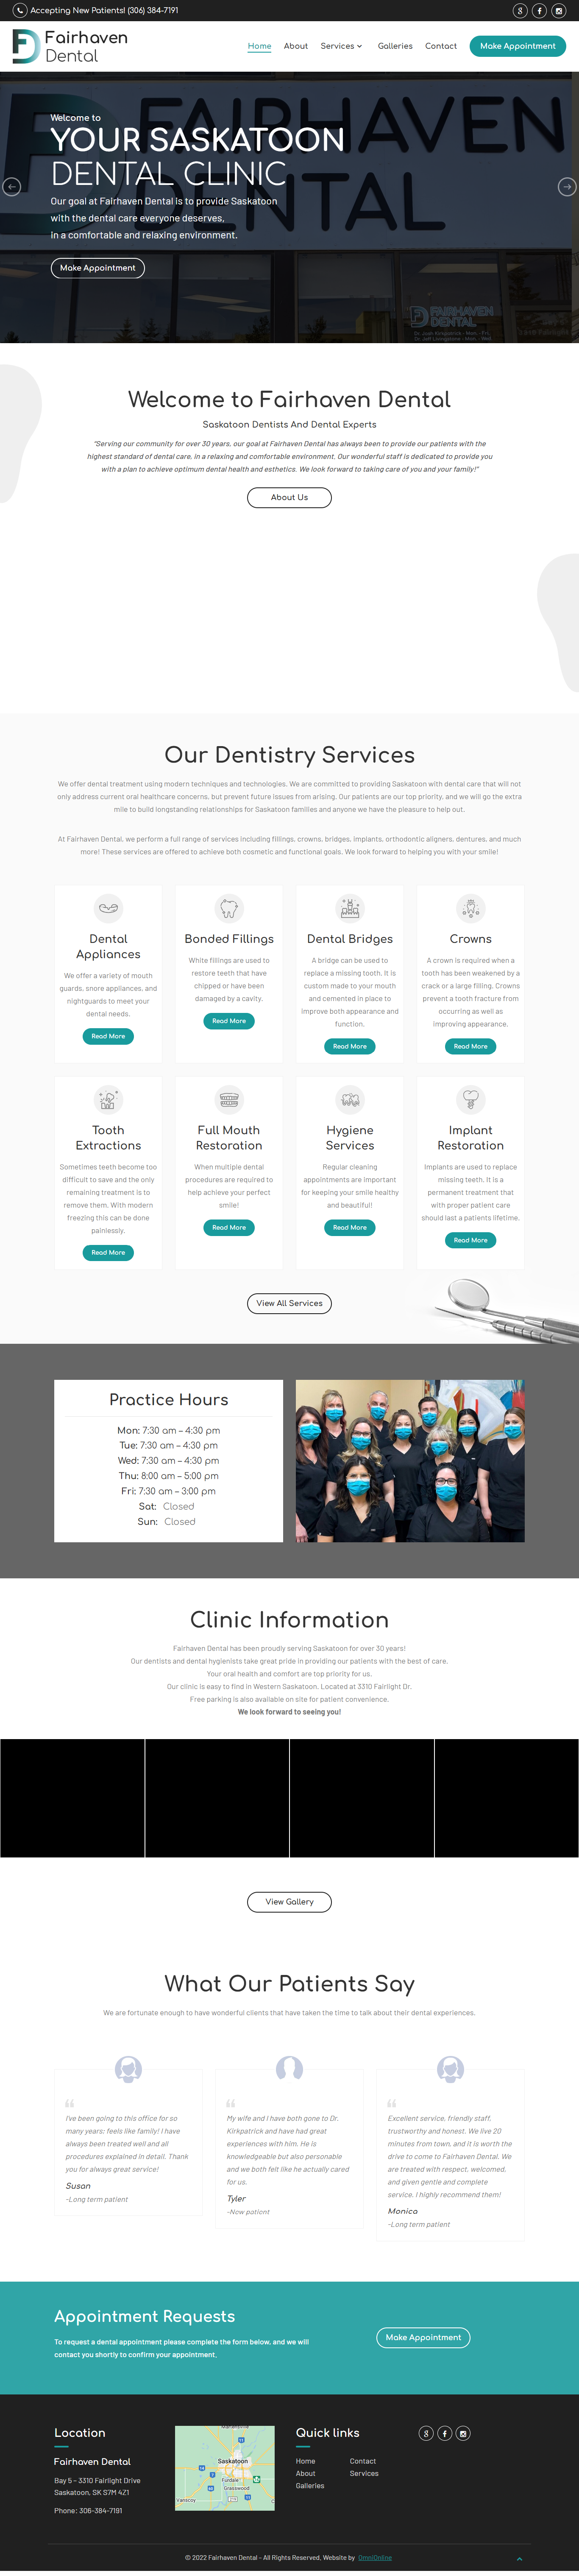 Fairhaven dental website- sask business web design